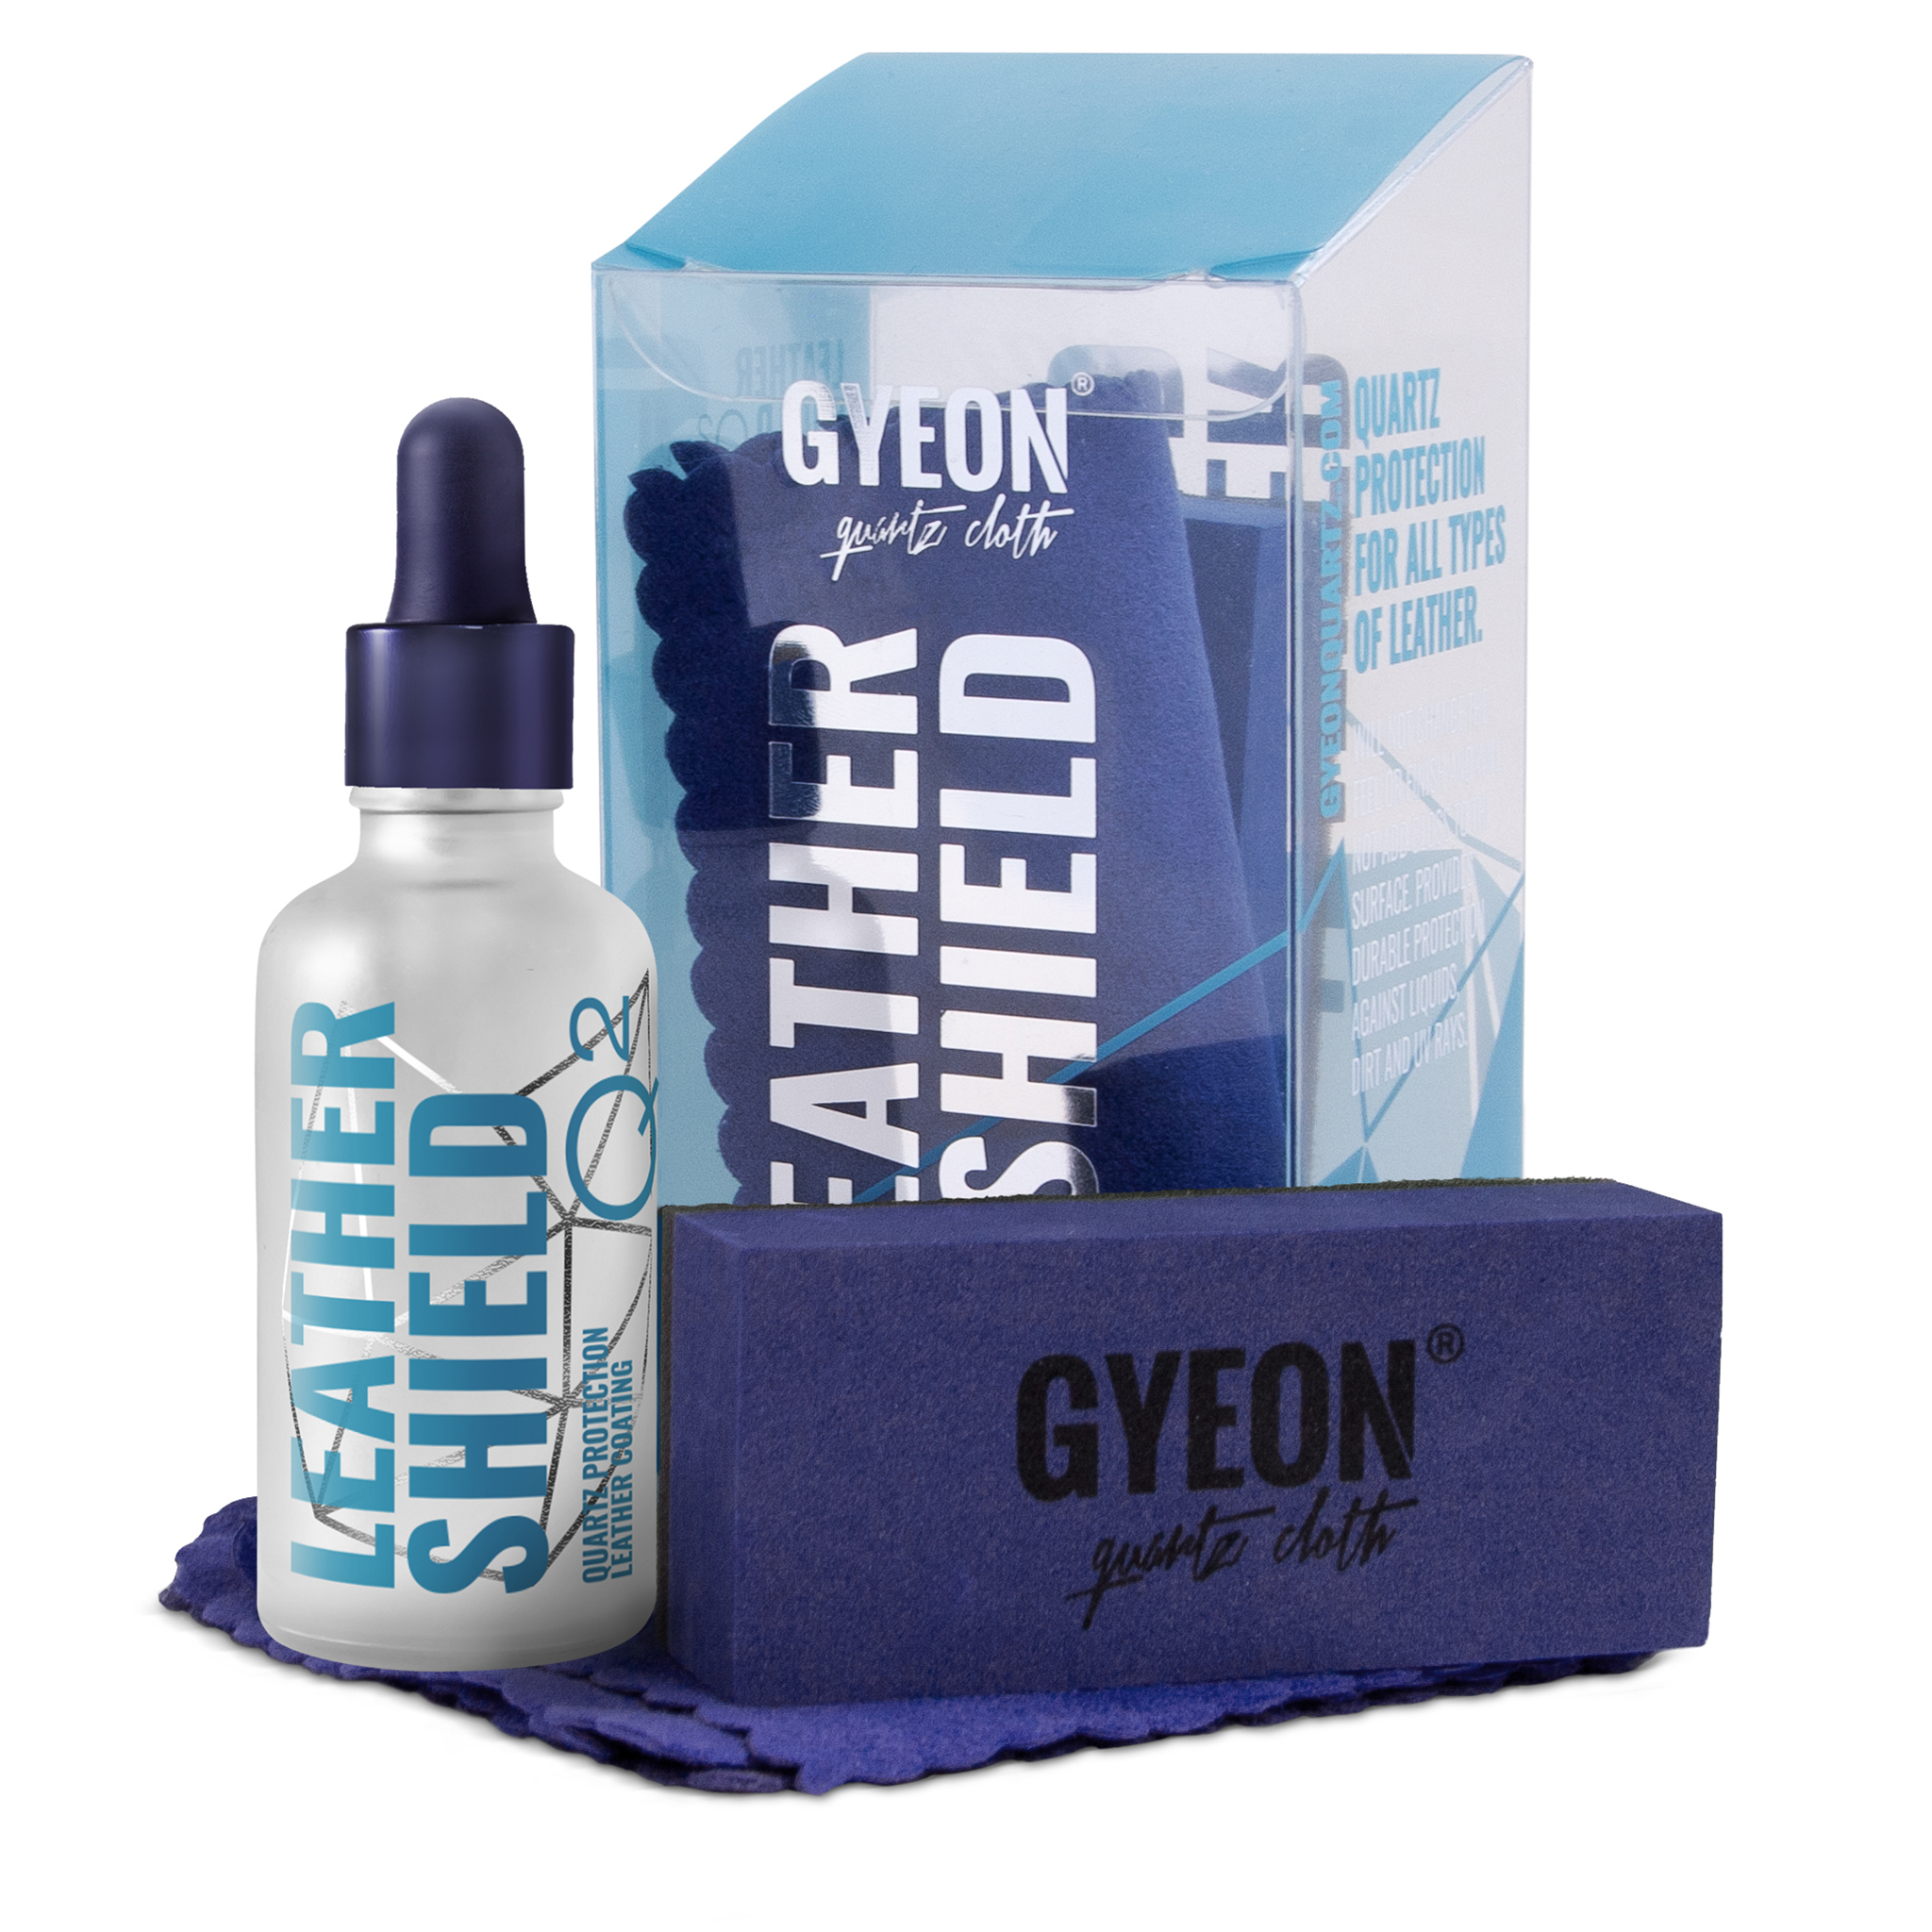 Skinnforsegling Gyeon Q2 LeatherShield, 100 ml